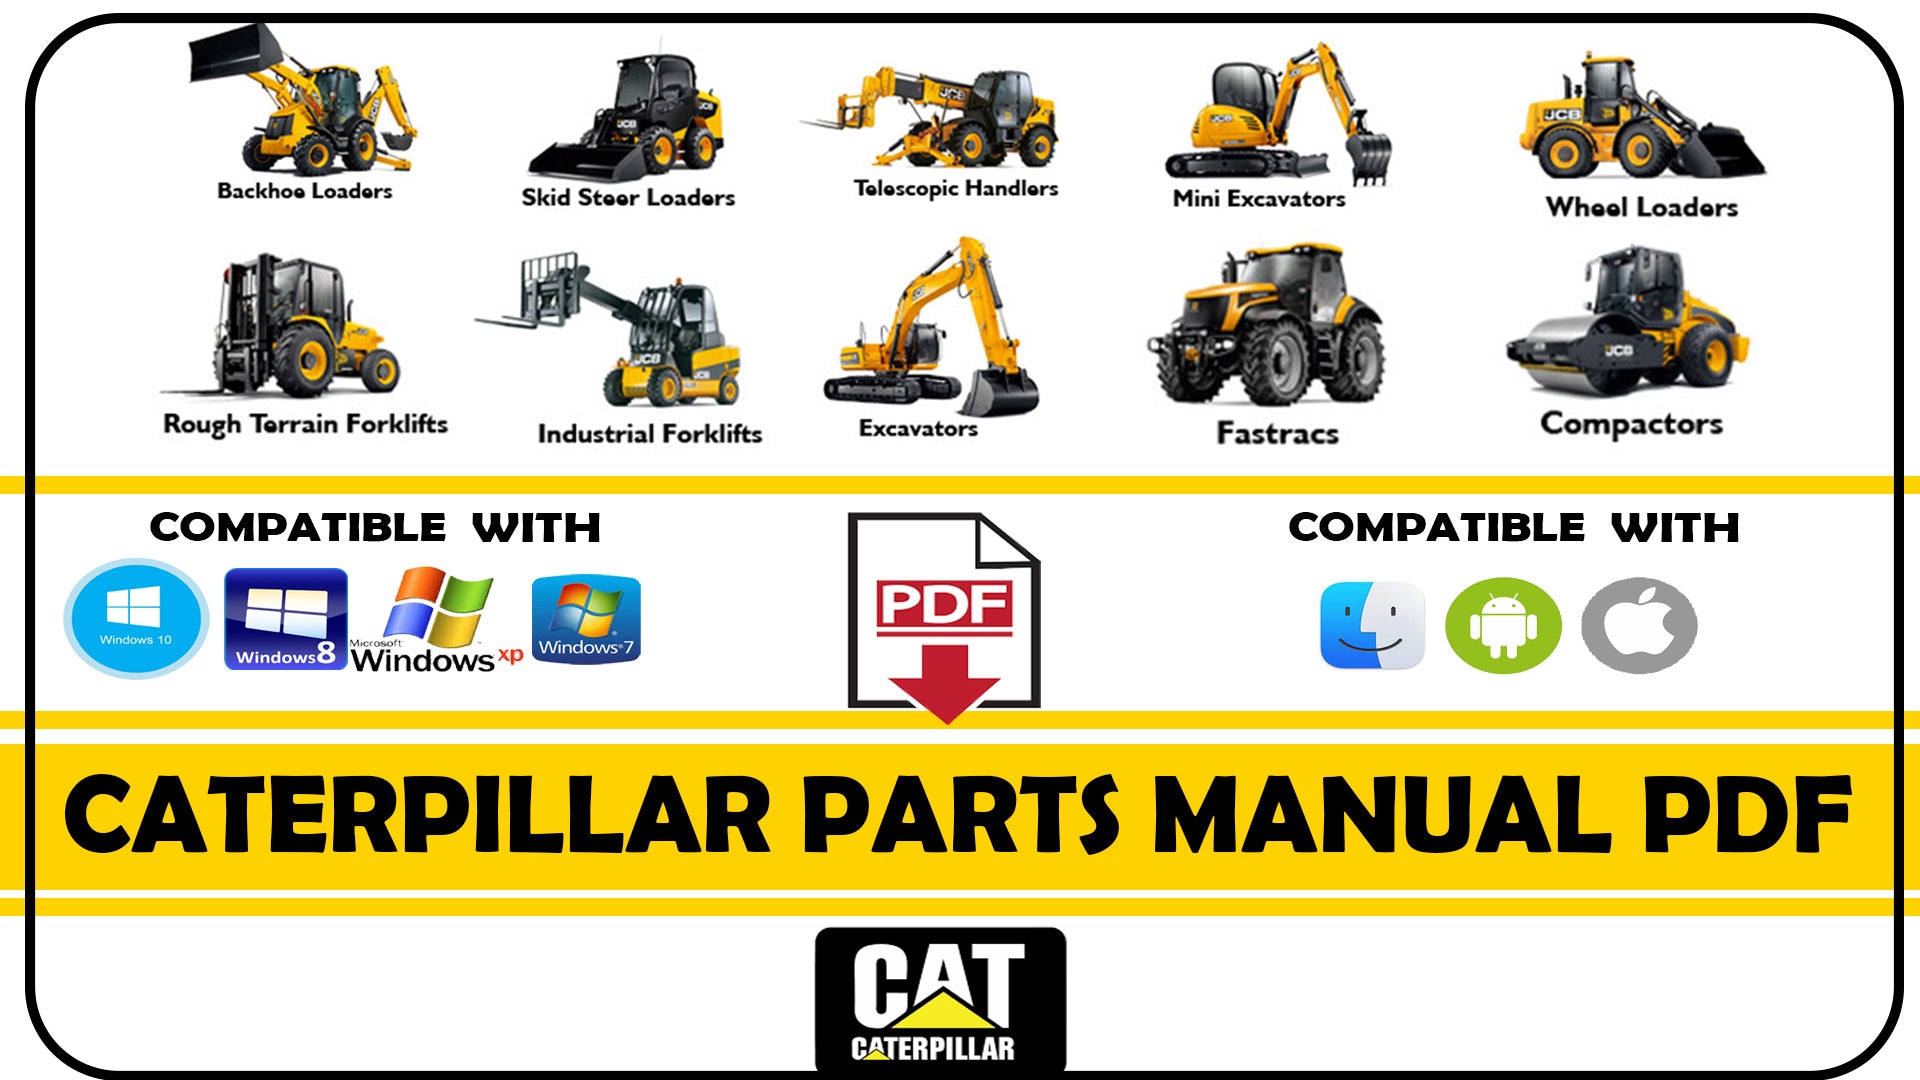 Cat Caterpillar 434e Backhoe Loader Parts Catalog Manual Serial Number :- Sjl00001-up